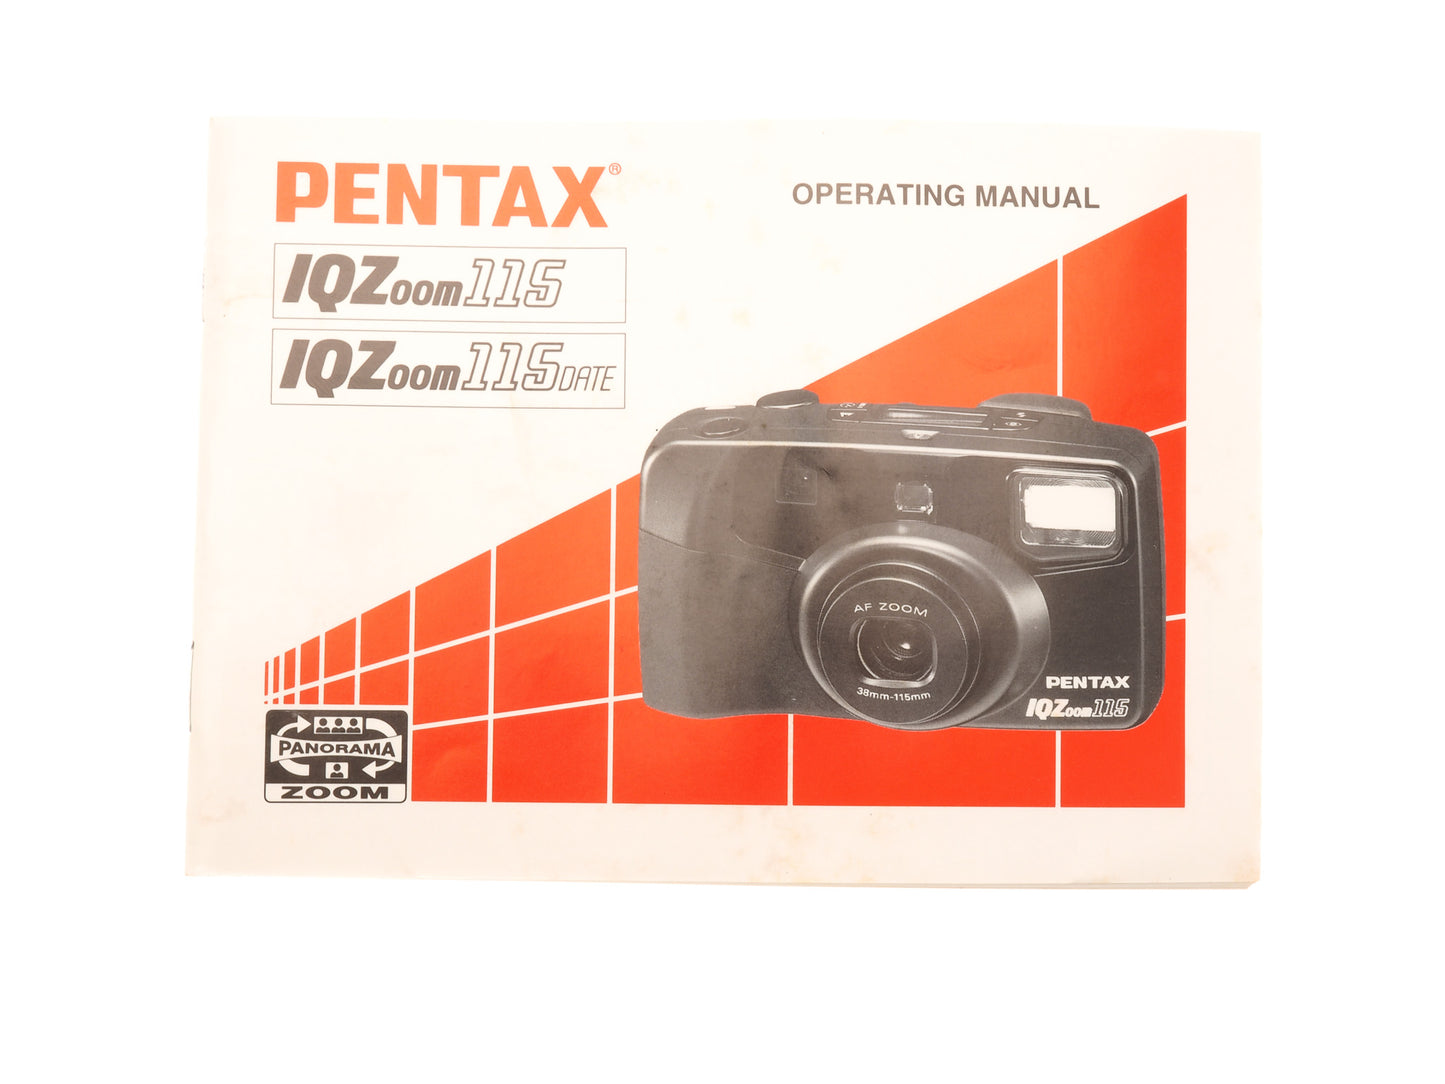 Pentax IQZoom115/IQZoom115 Date Instructions